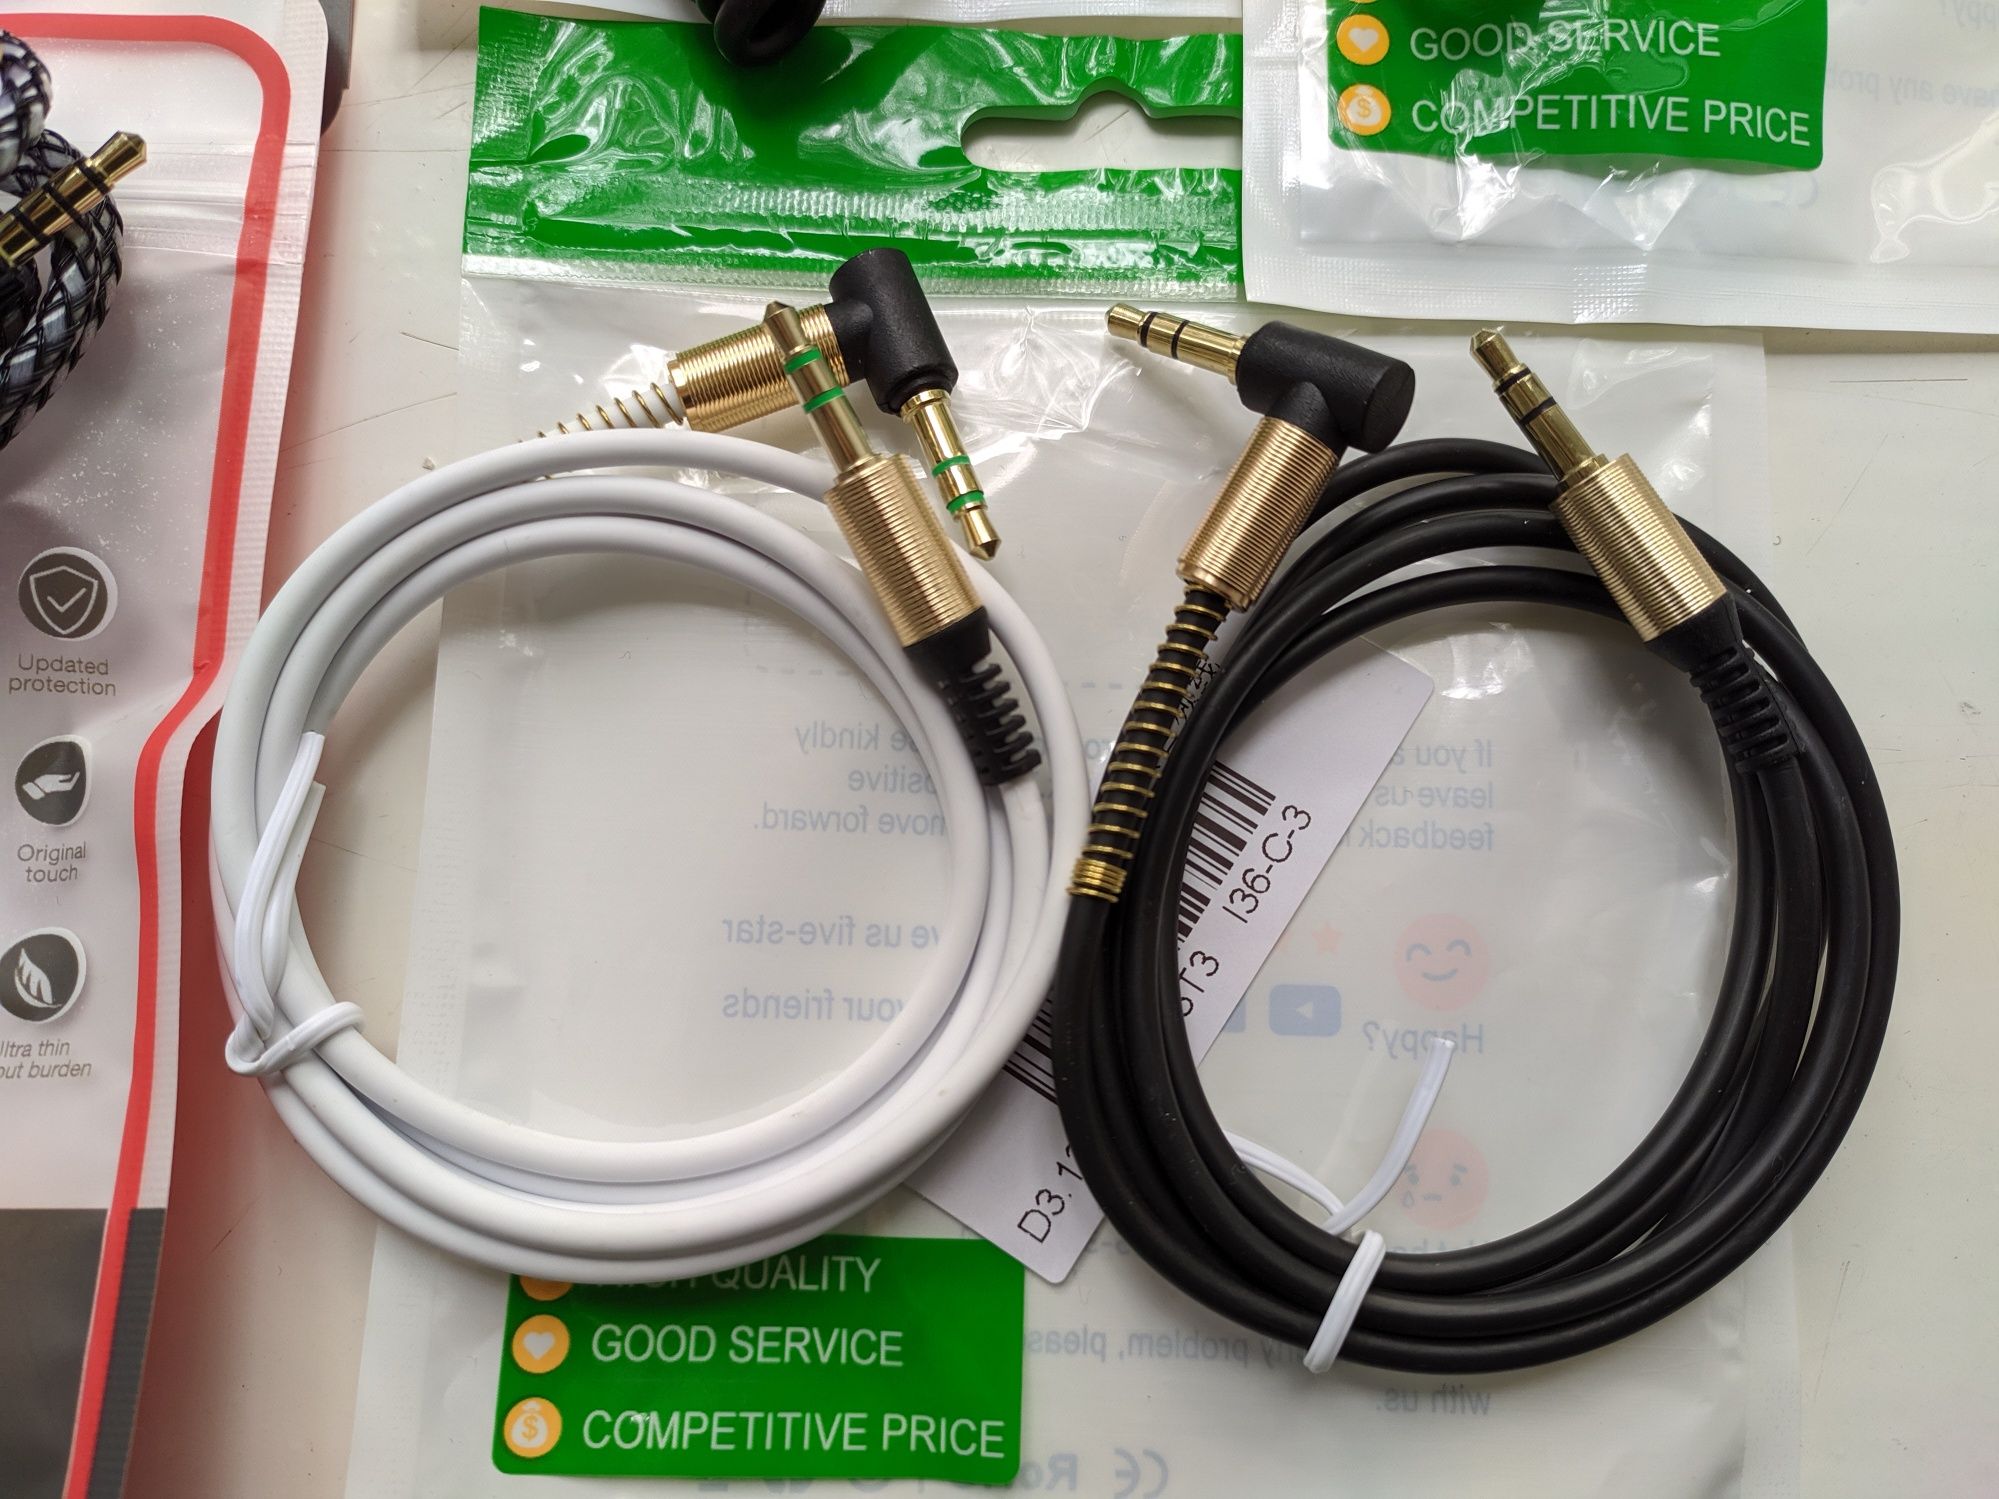 AUX аудио кабель 3.5 mm фирменный Прочный аукс провод шнур